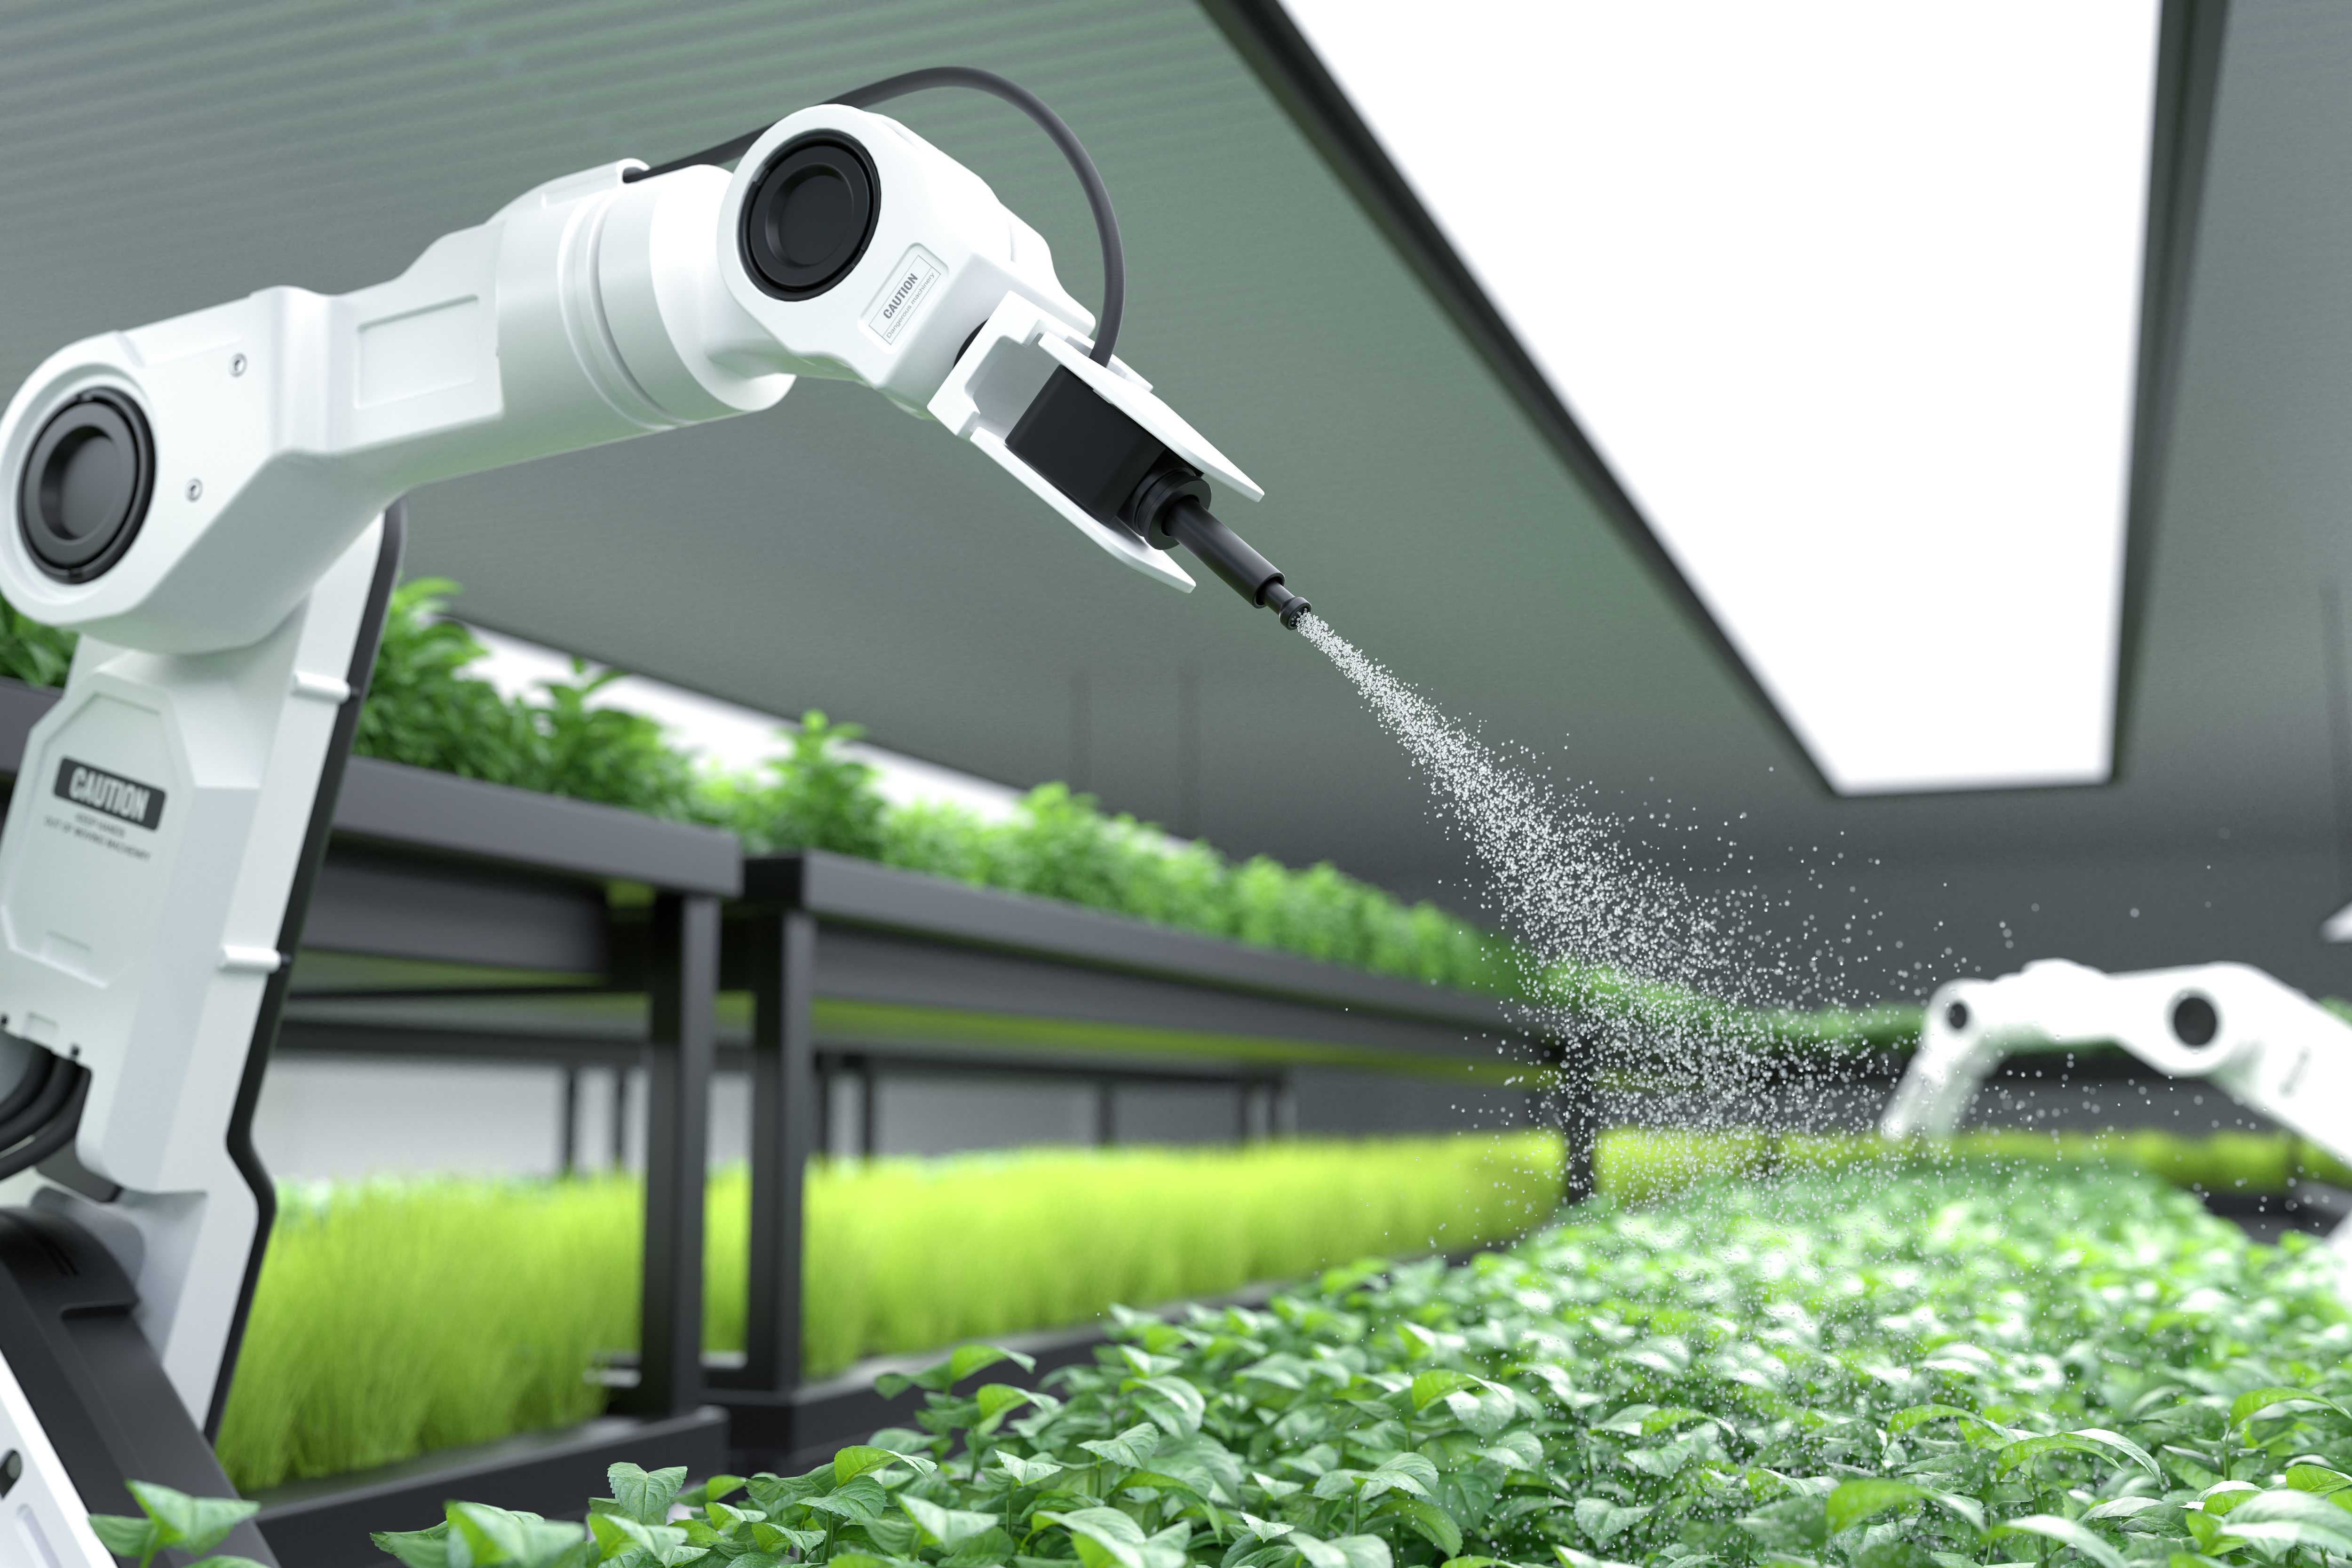 smart-robotic-farmer-spraying-fertilizer-vegetable-green-plants.jpg